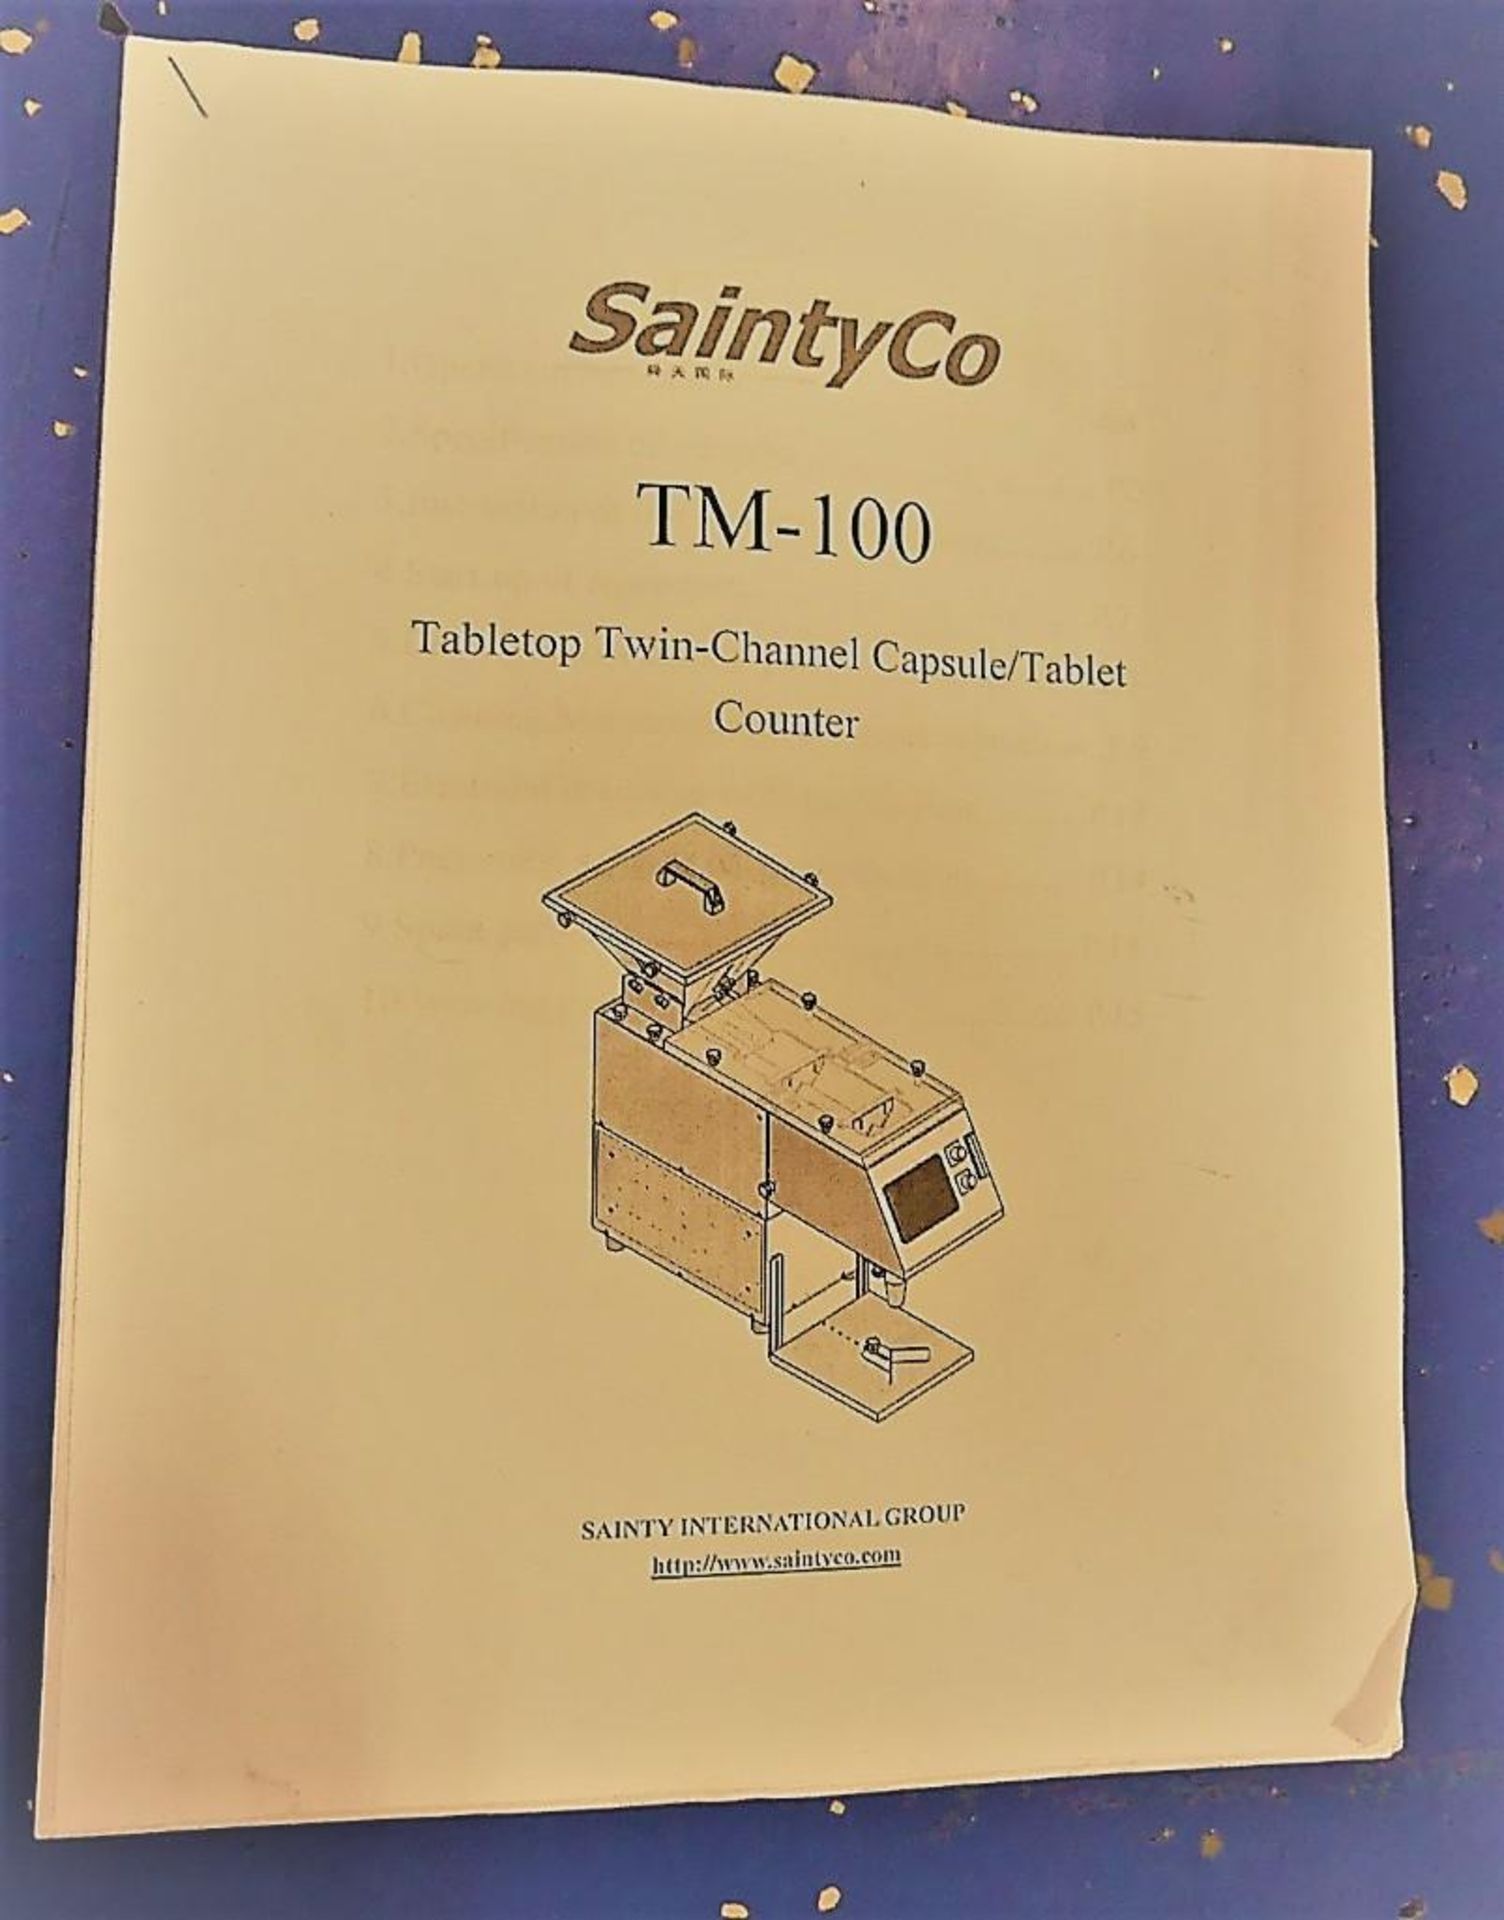 SaintyCo TM-100 Pill Counter - Image 6 of 8